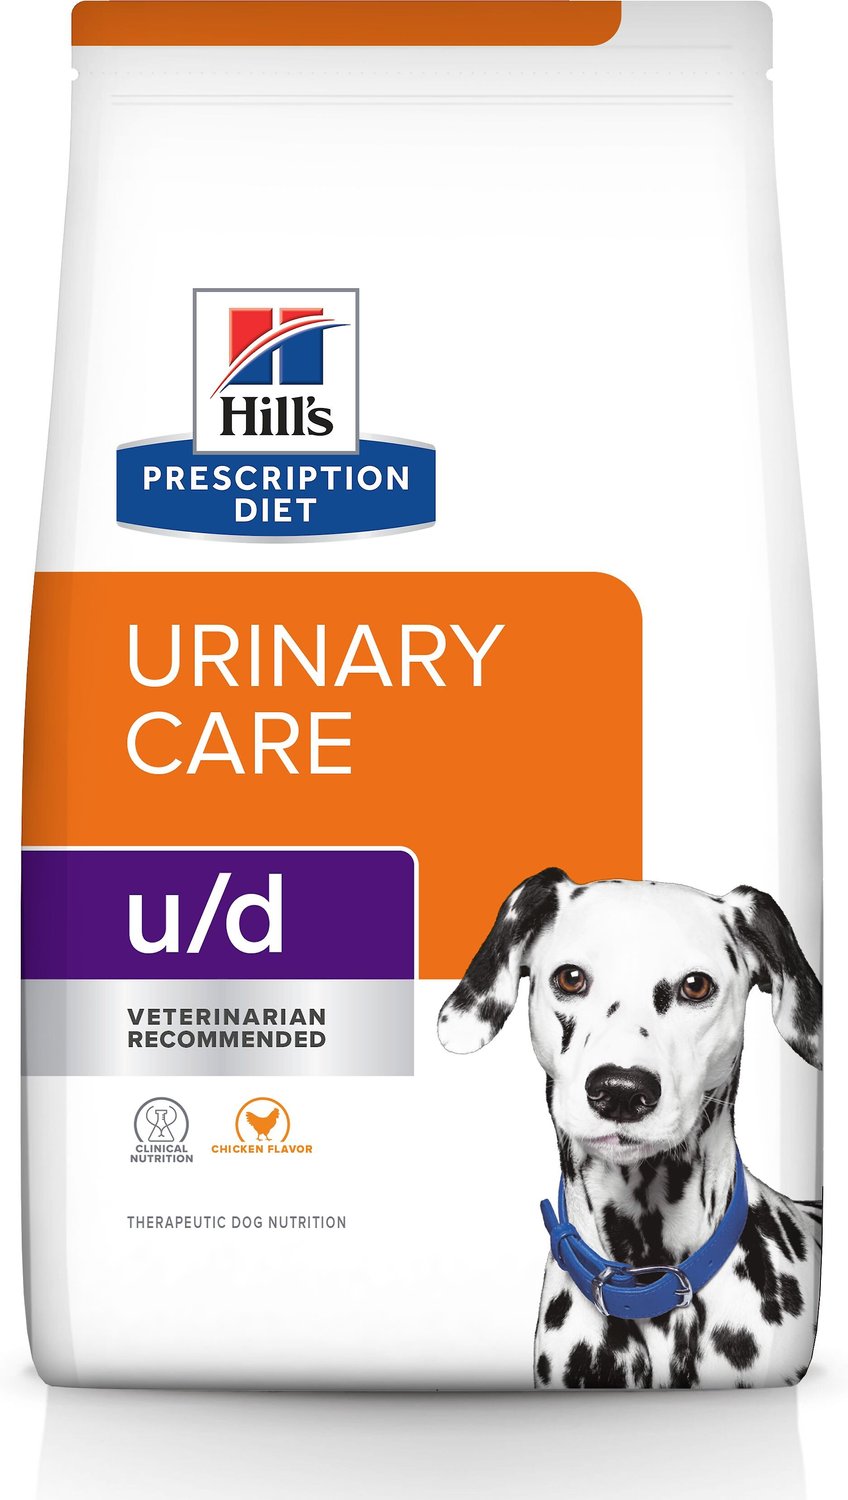 Dog Food for Urinary Hills U/D Non-Struv